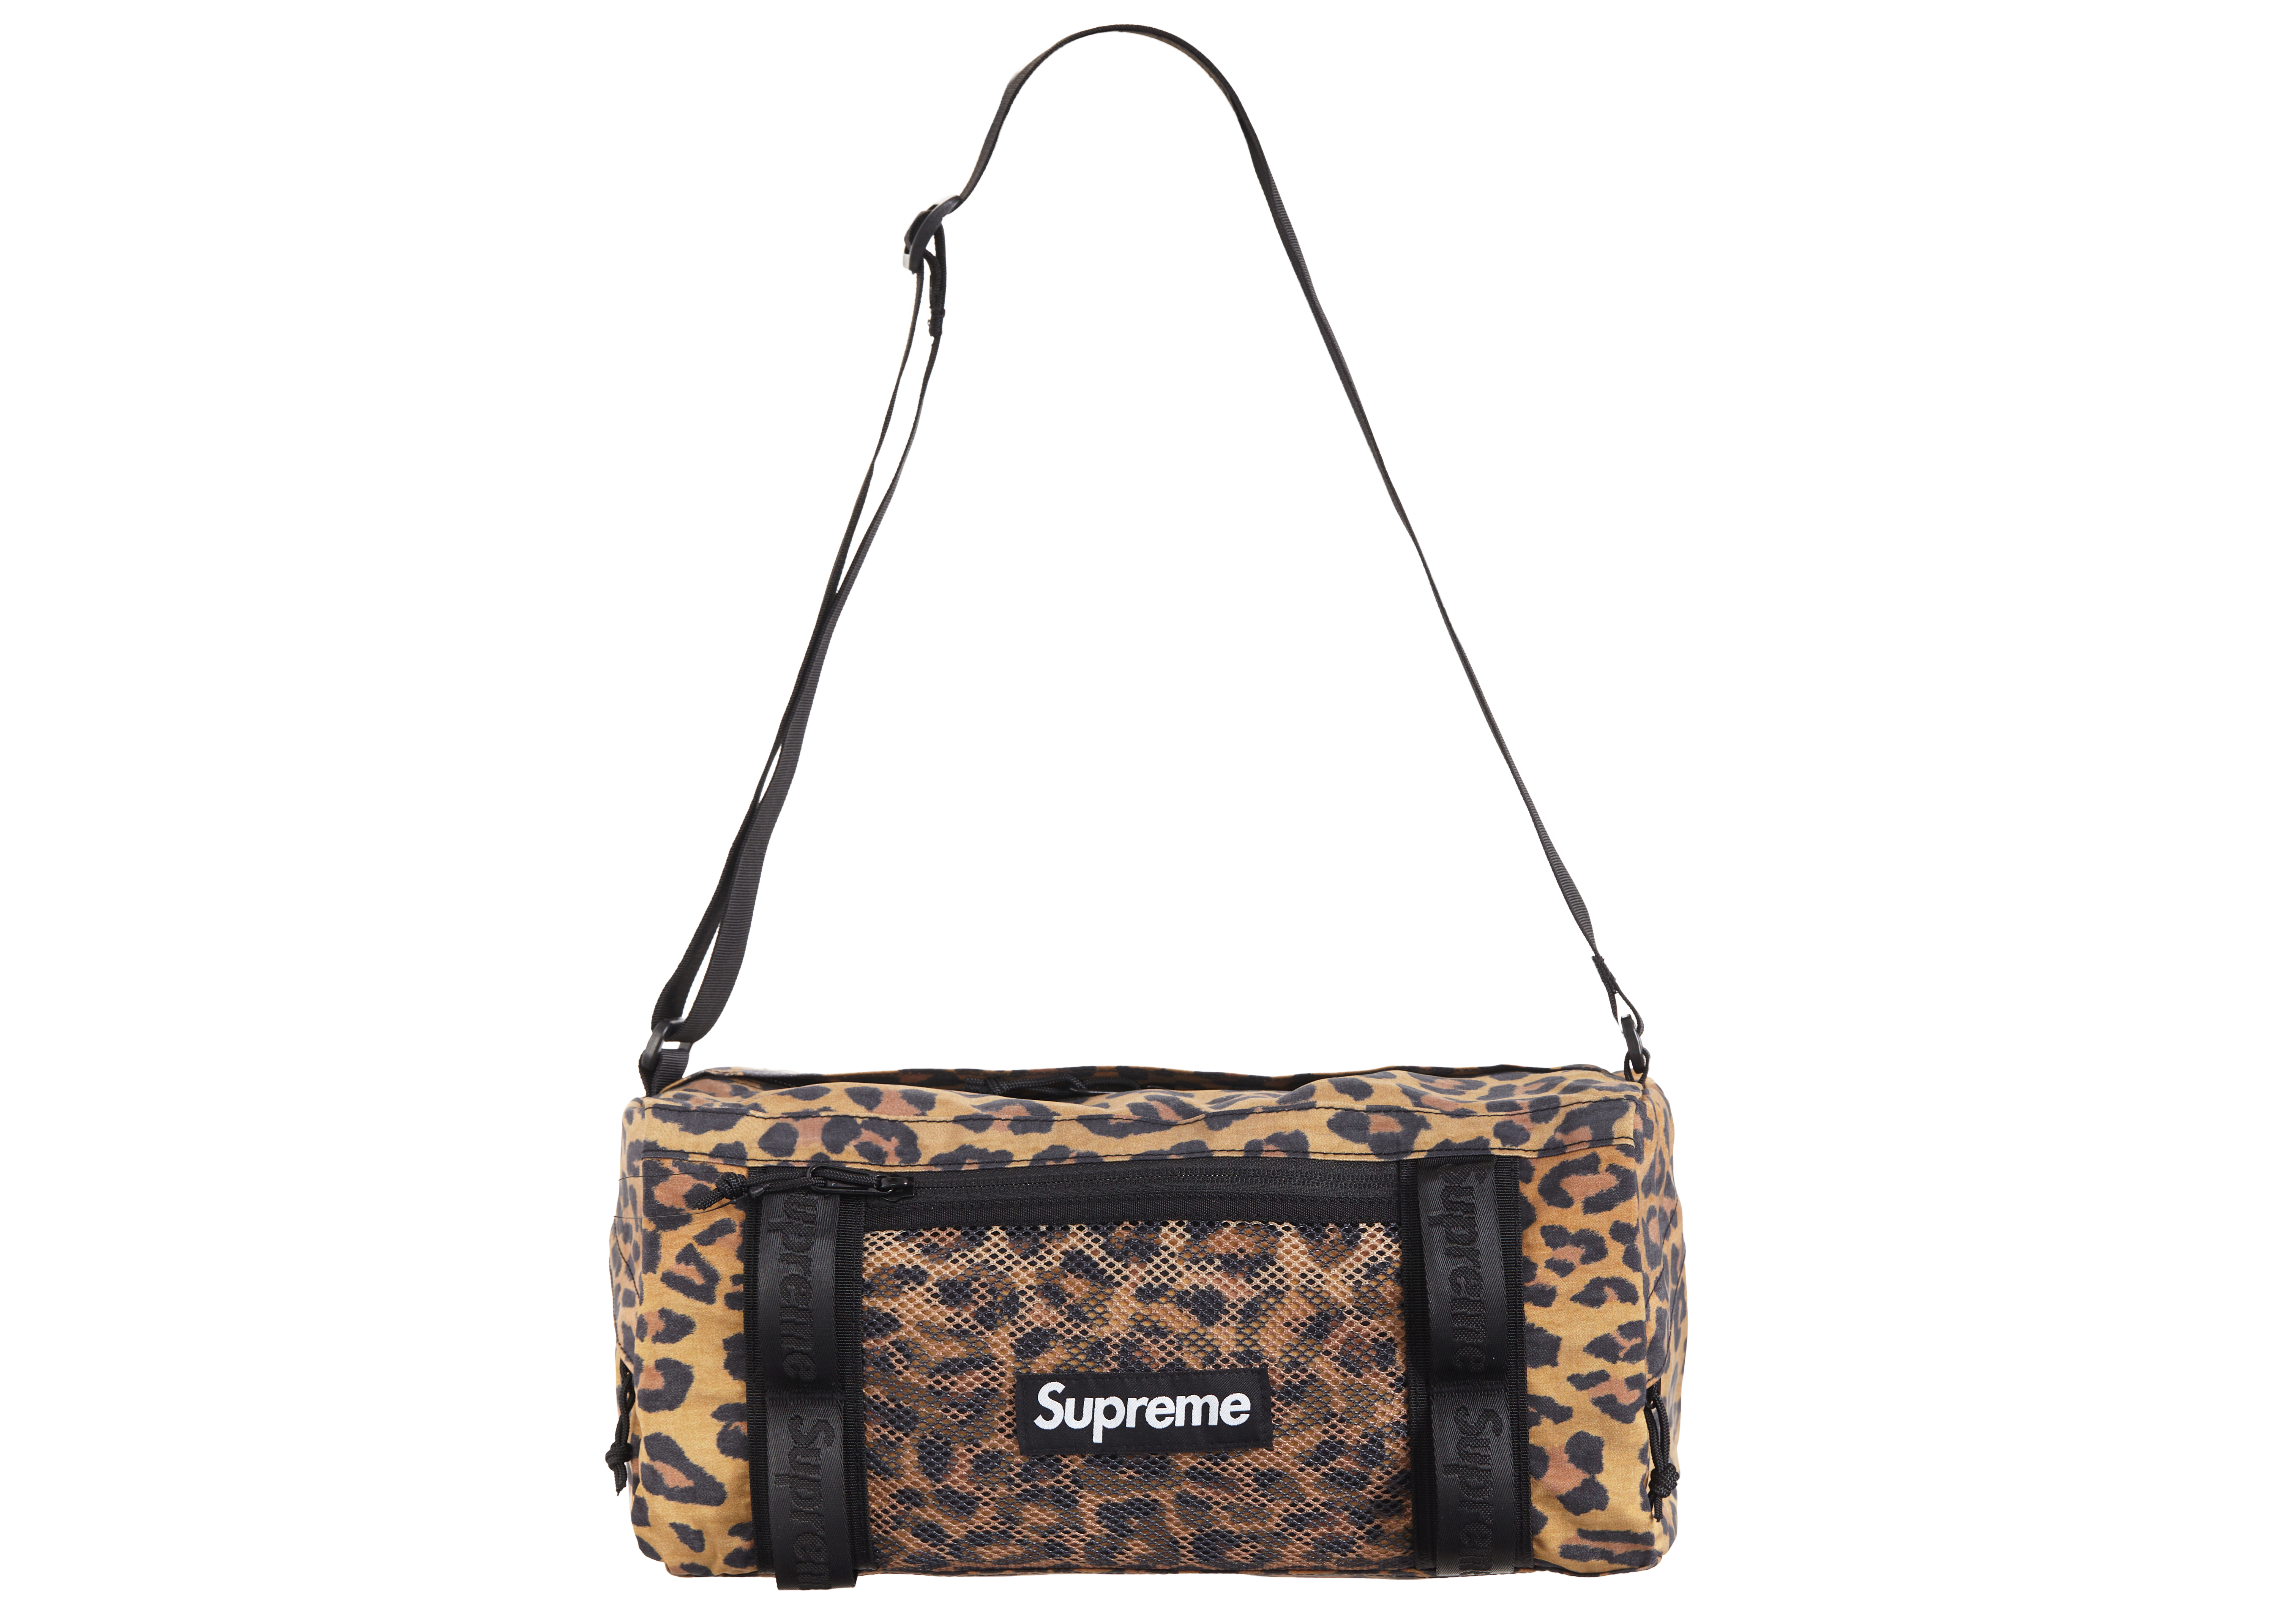 Supreme Mini Duffle Bag Leopard - FW20 - US